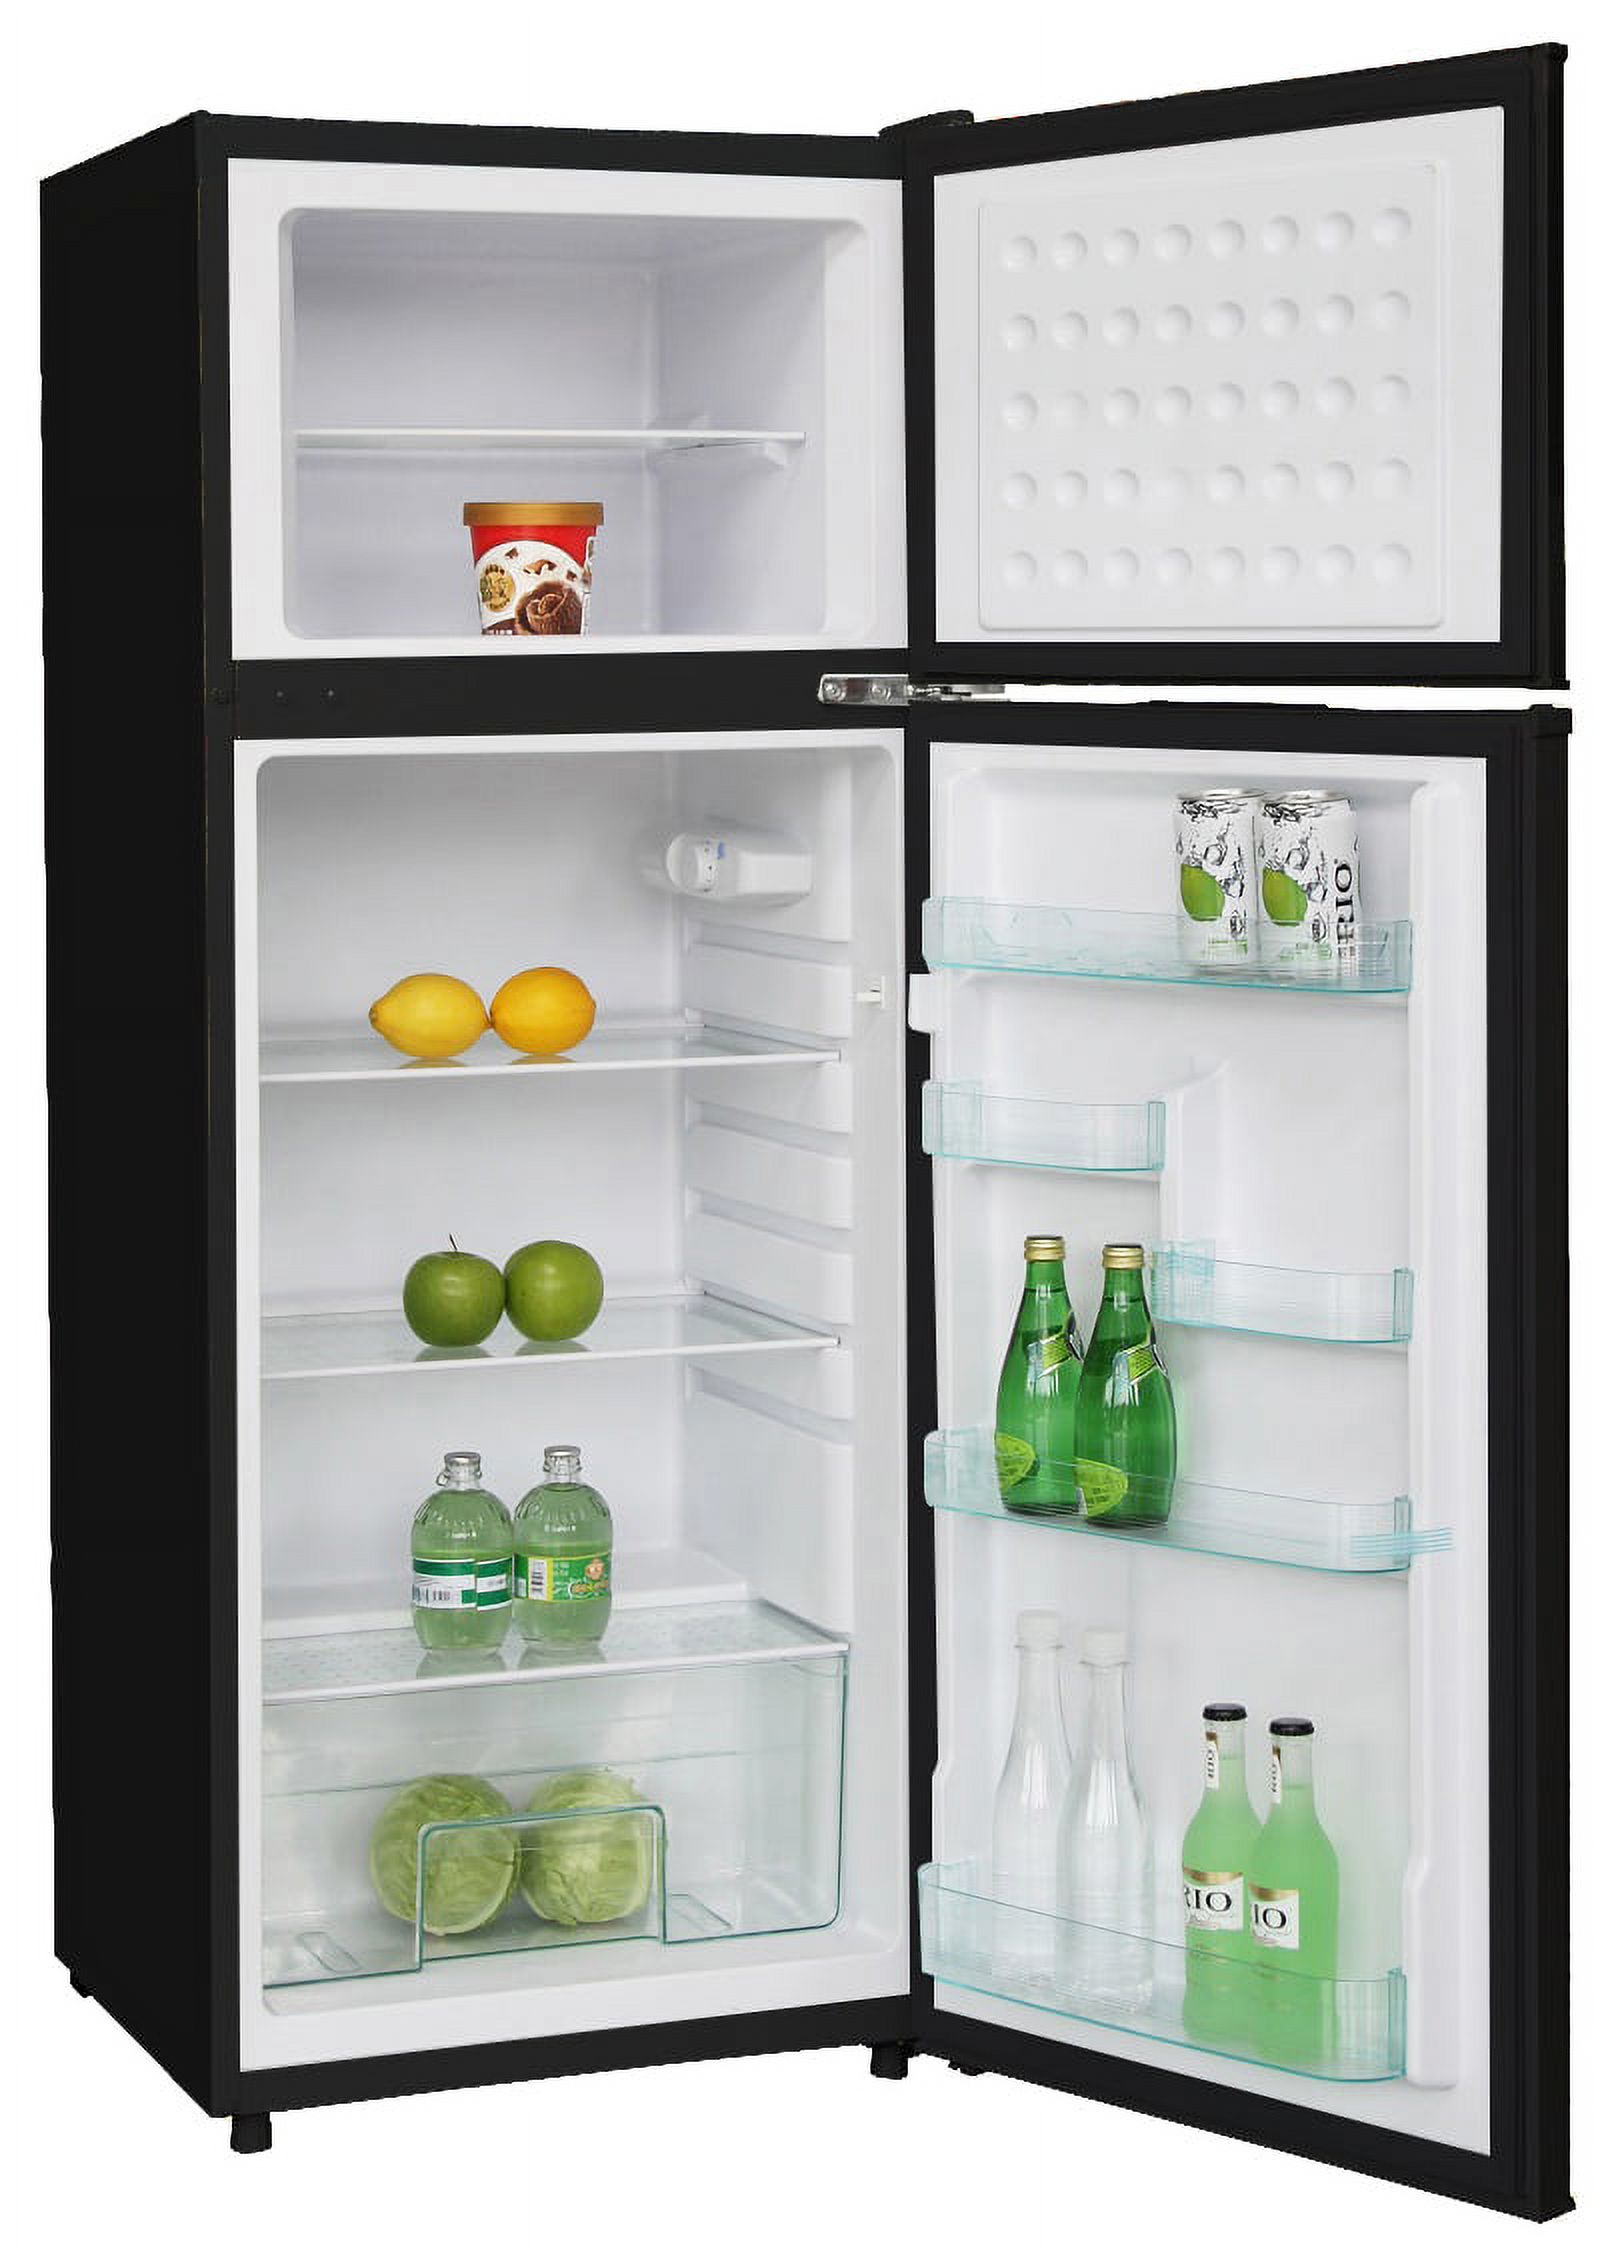 RCA 7.5 Cu. Ft. Top Freezer Refrigerator, RFR741 (Black) - image 3 of 3